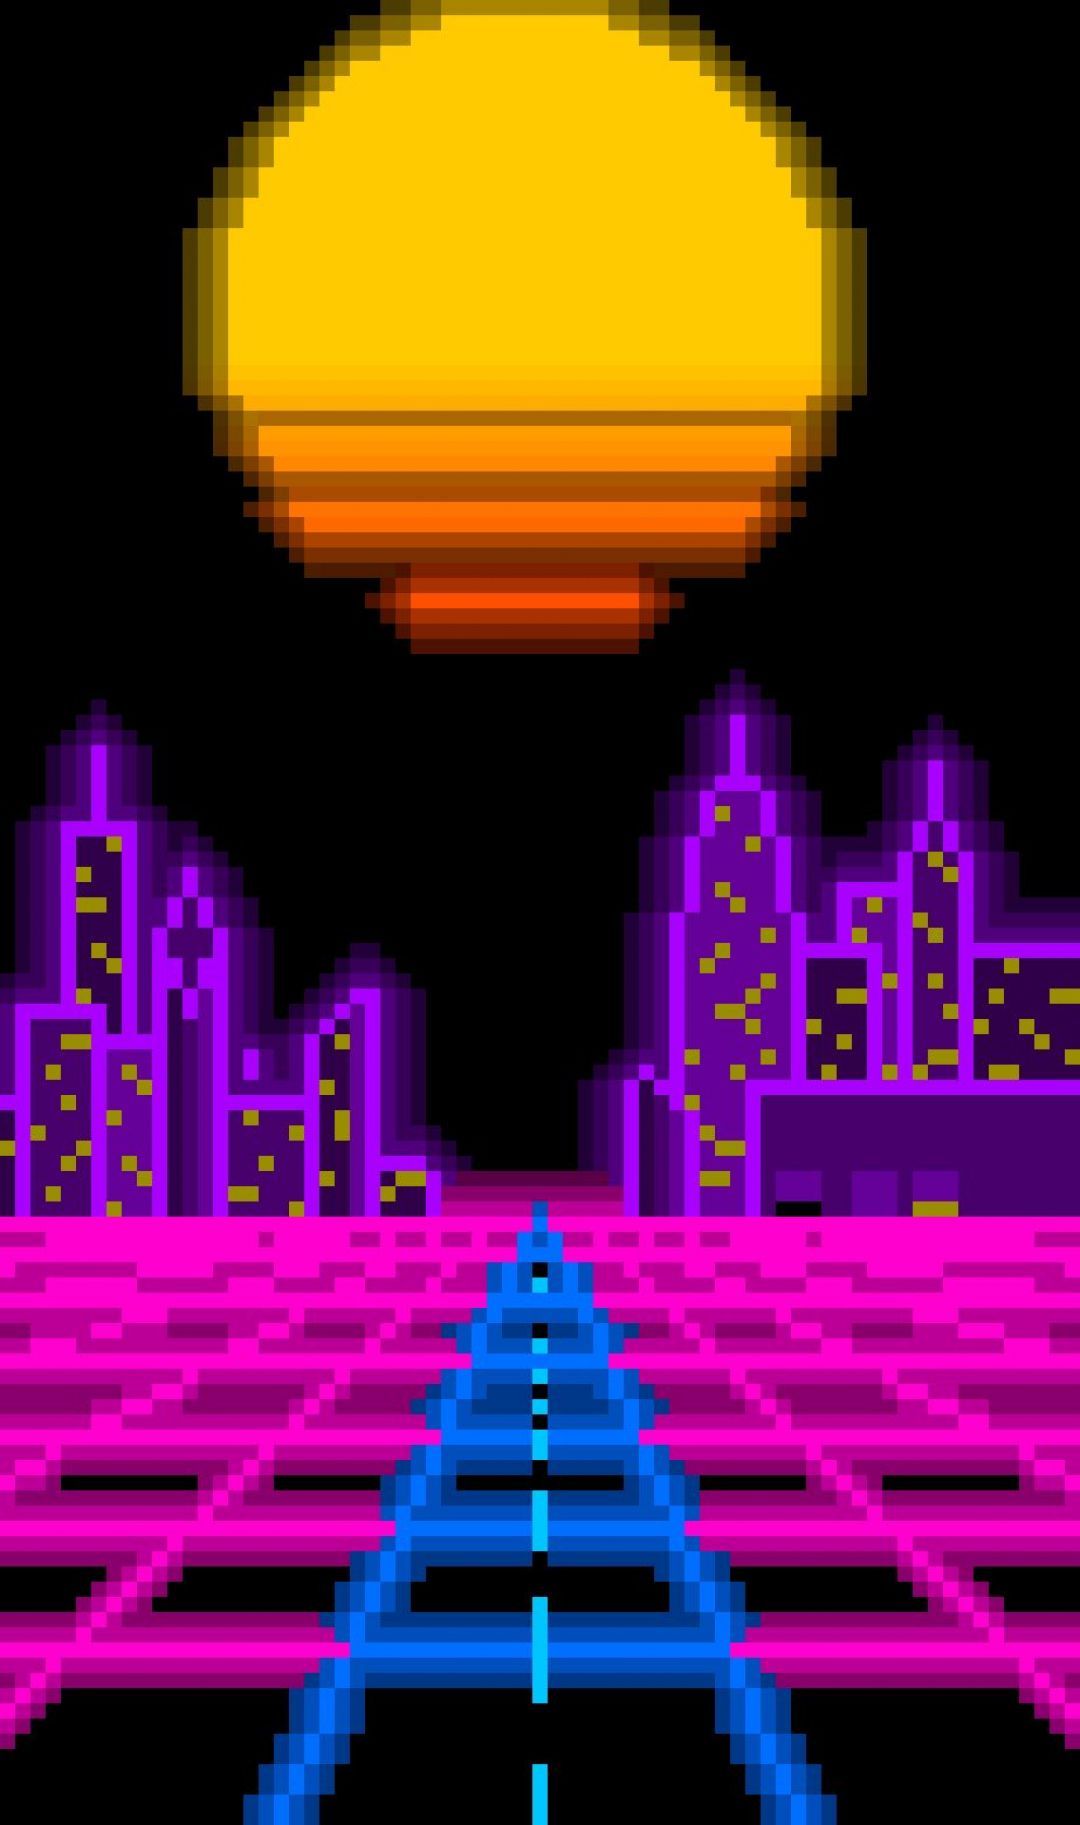 A retro pixel art city scene with the sun setting - Pixel art